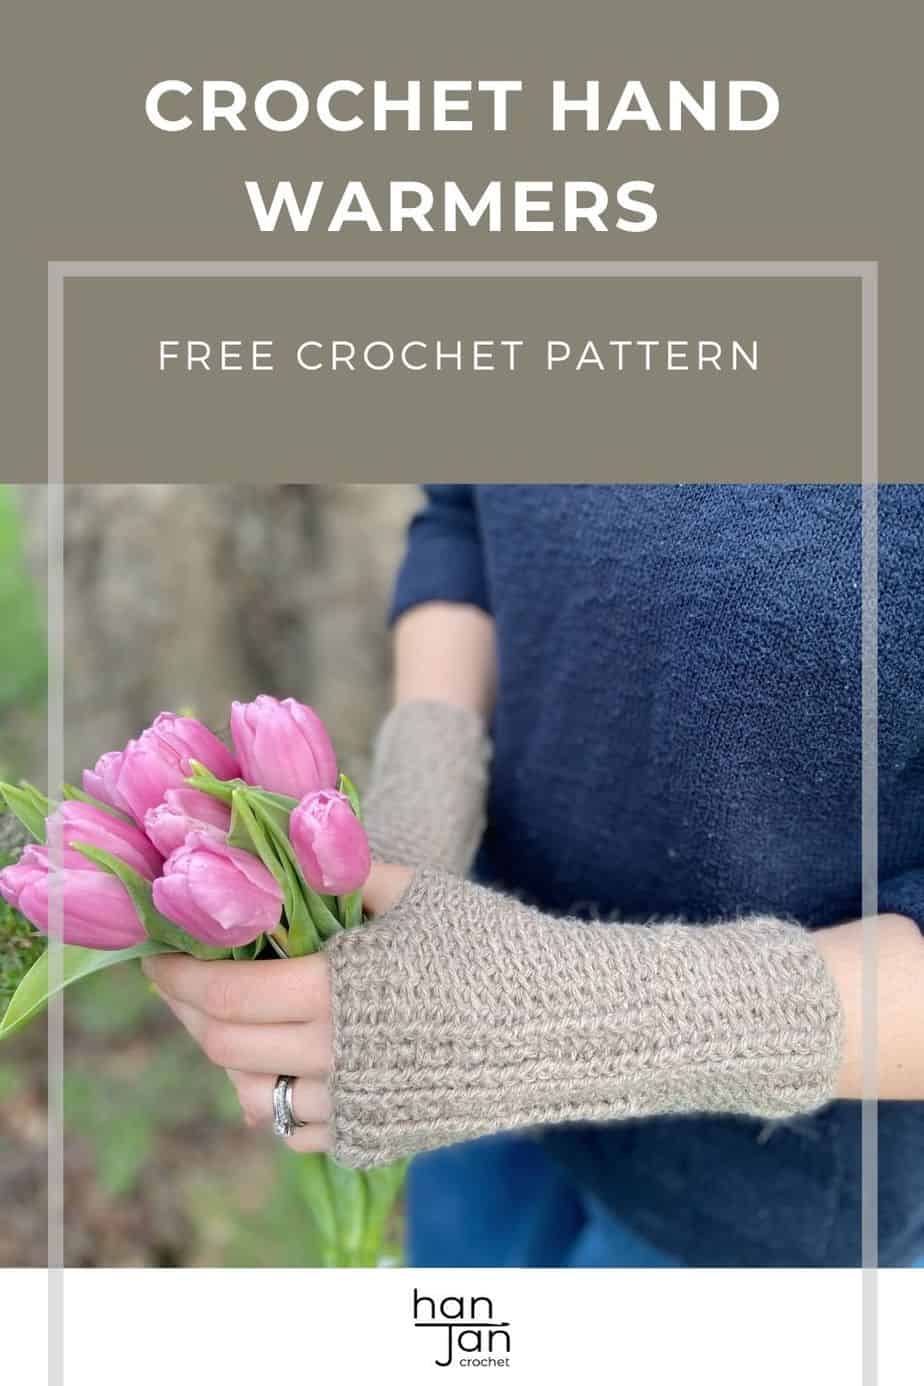 fingerless crochet mittens on hands holding a bunch of pink tulips